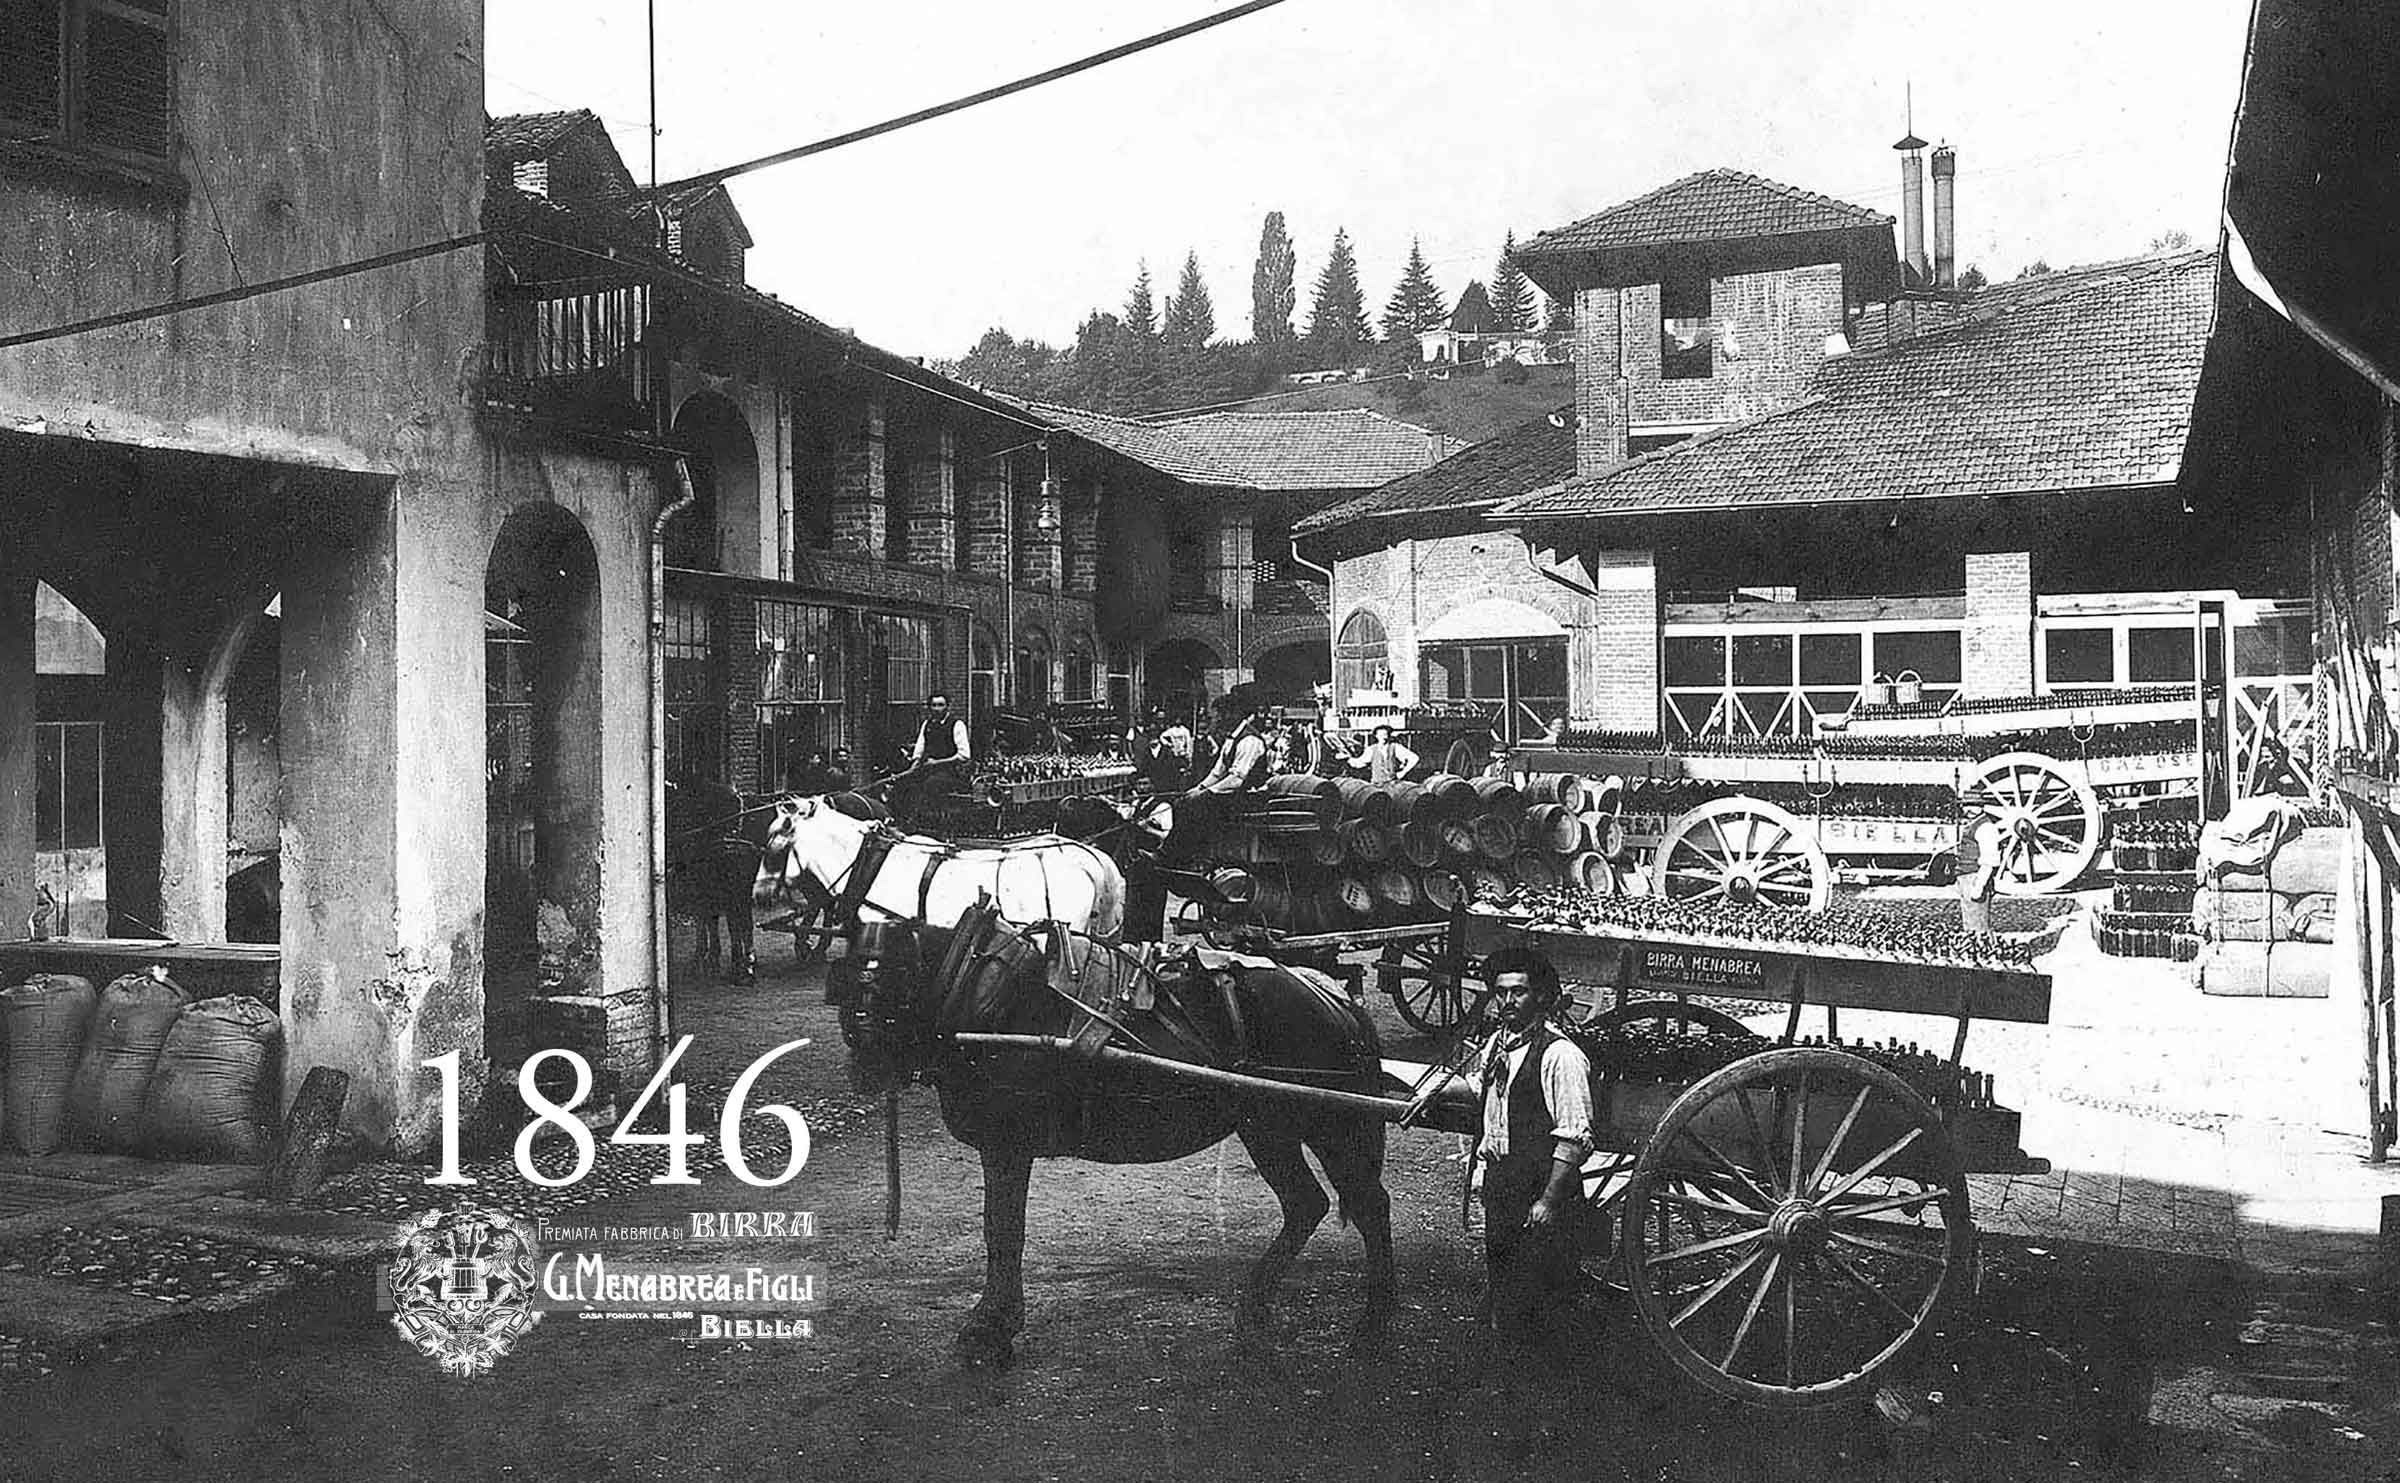 Menabrea Brewery history image 1846 02